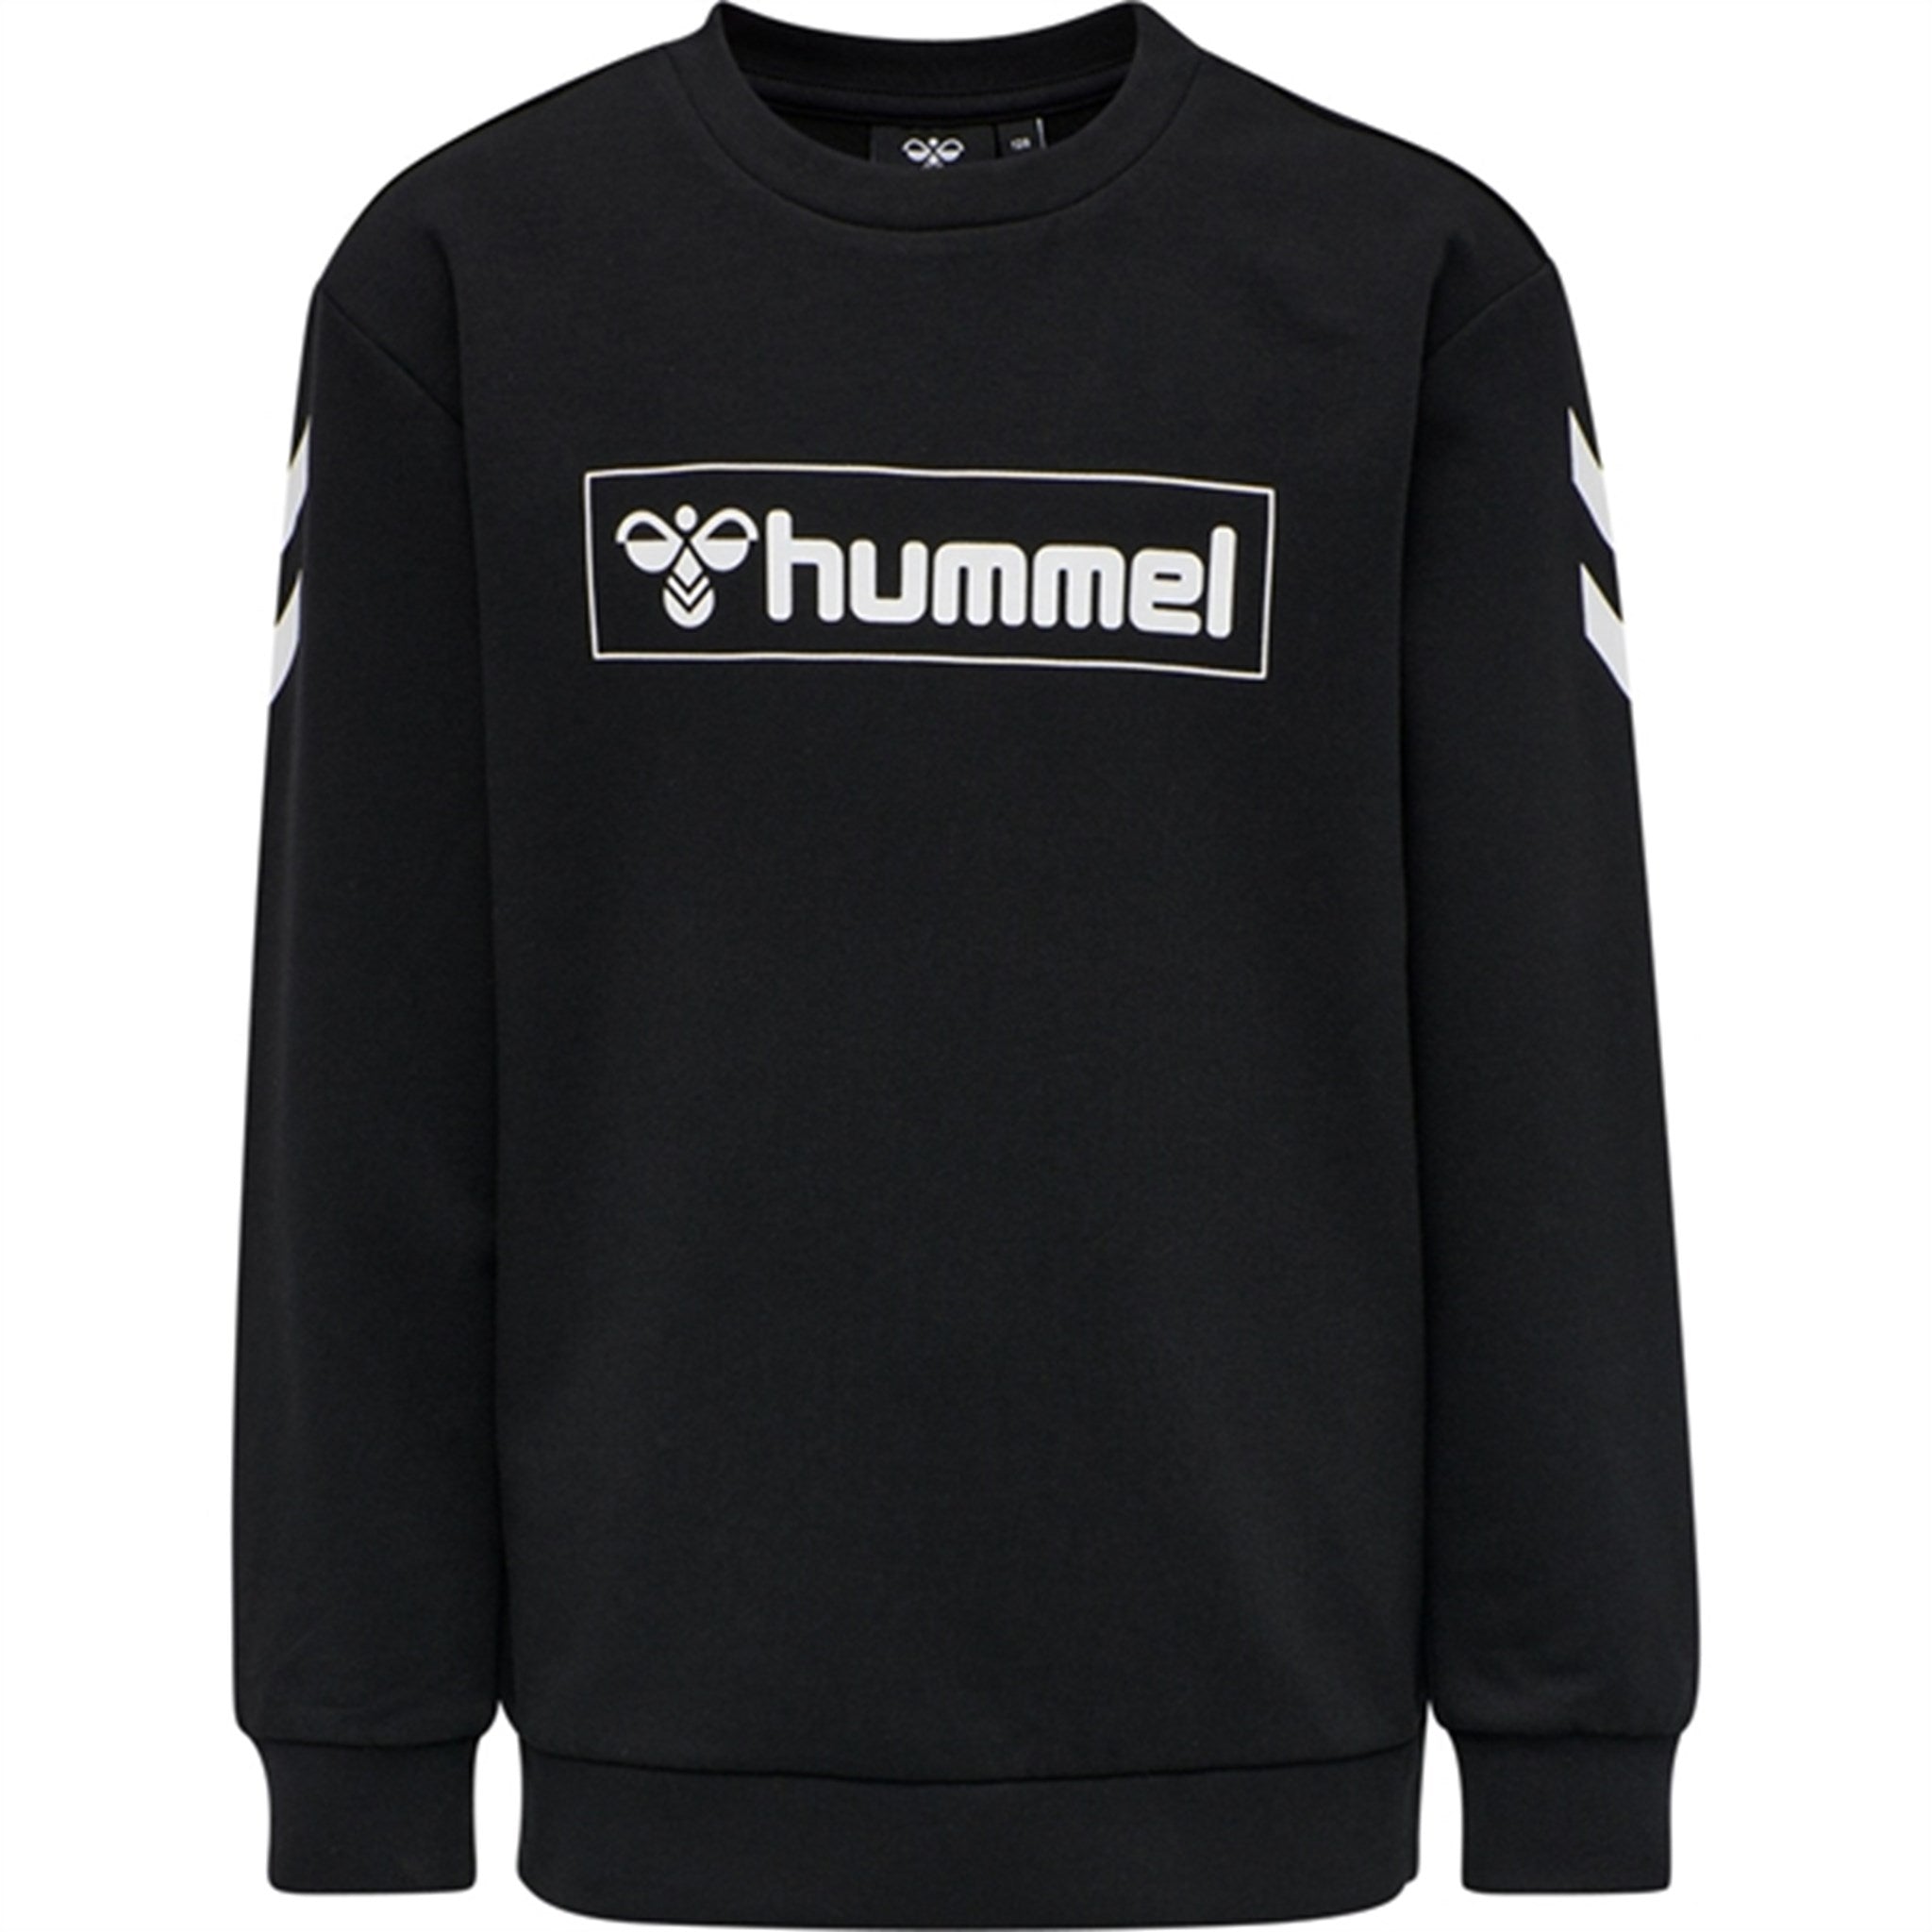 Hummel Black Box Sweatshirt